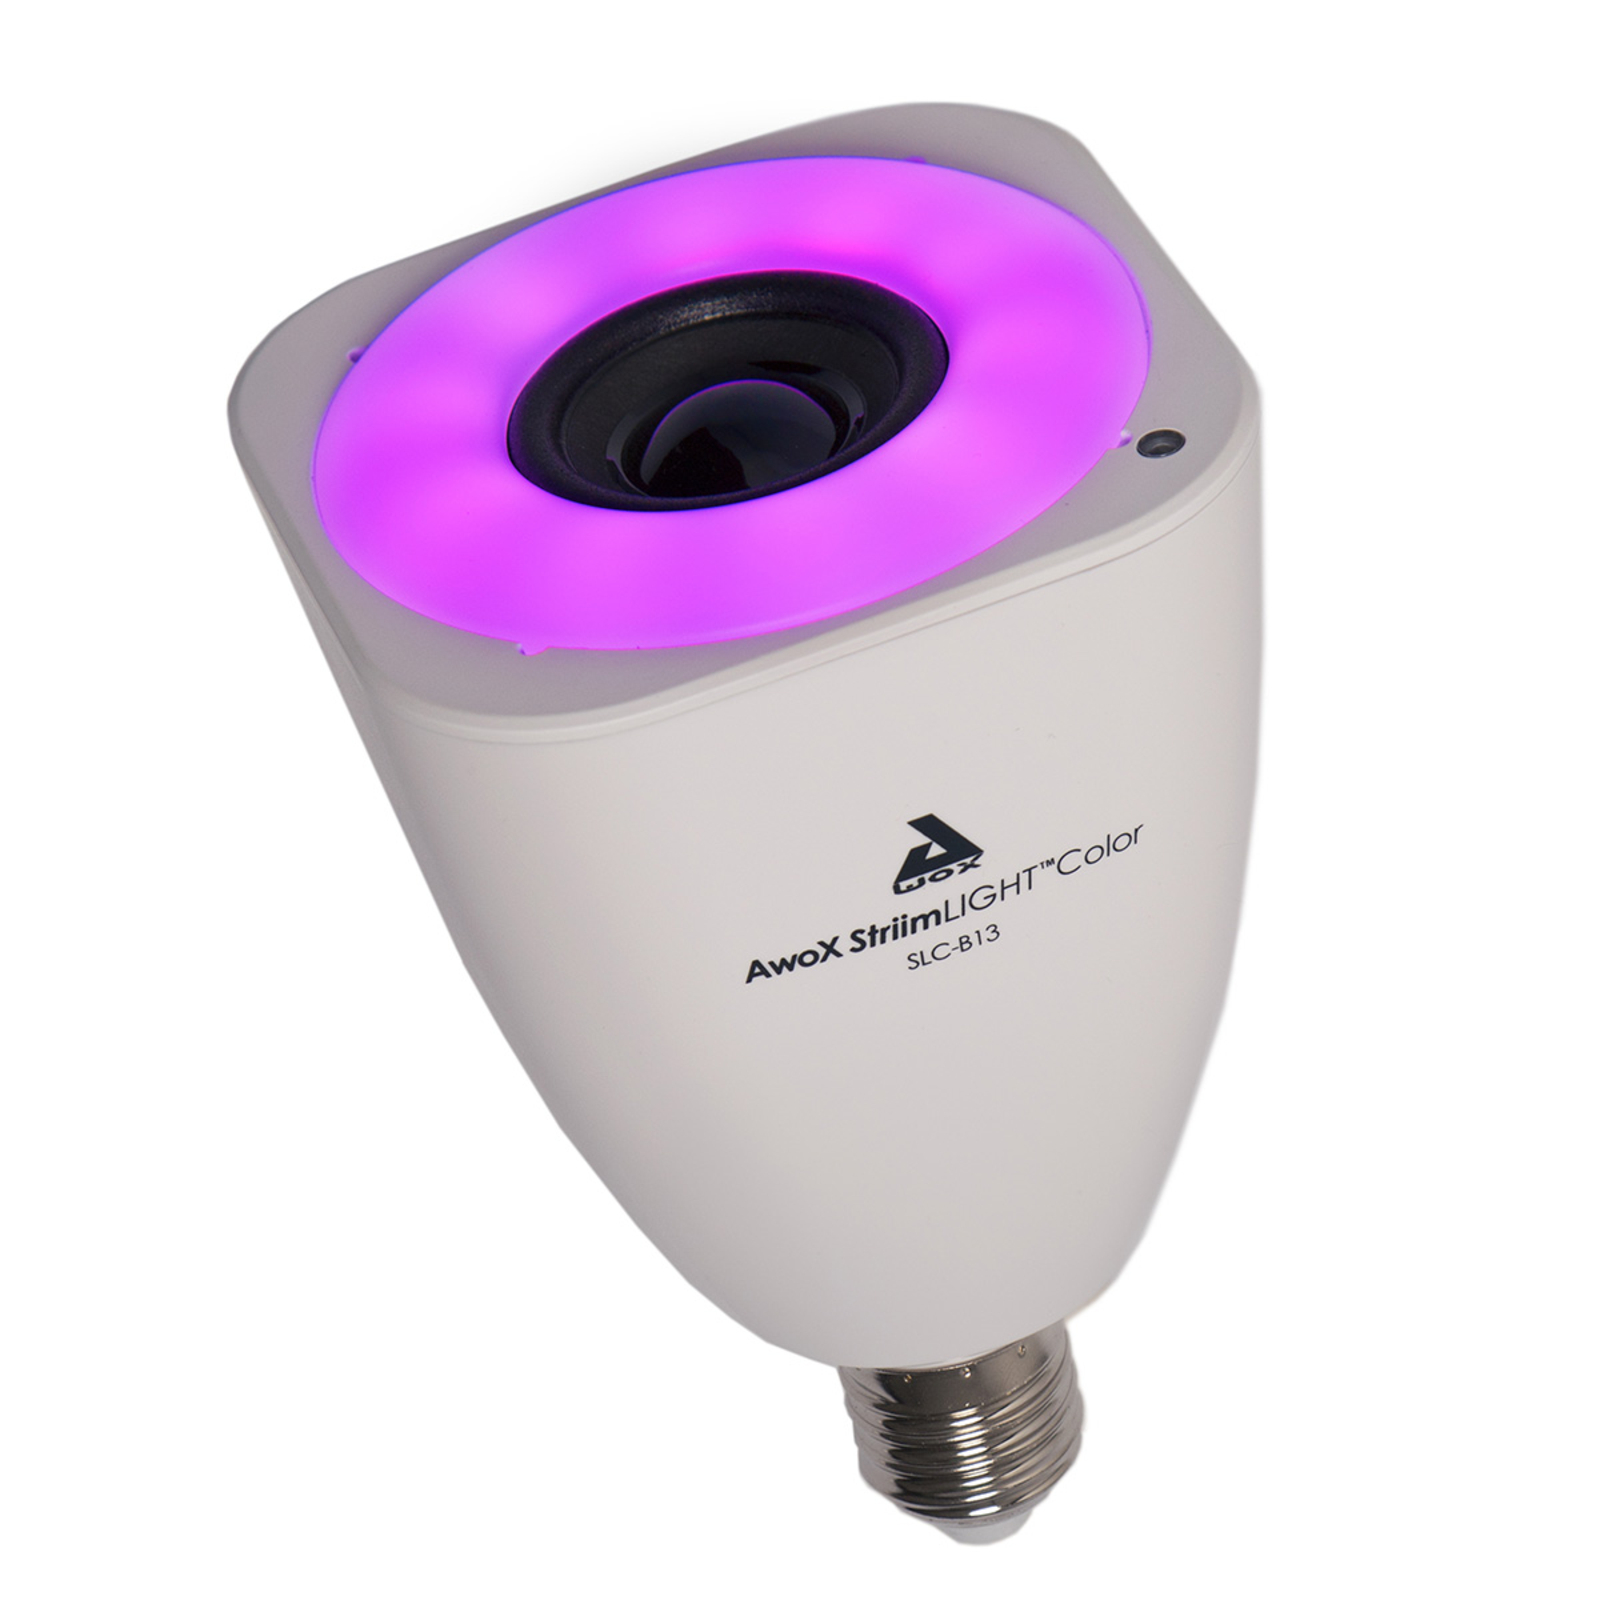 AwoX StriimLIGHT Color LED lamp E27, Bluetooth